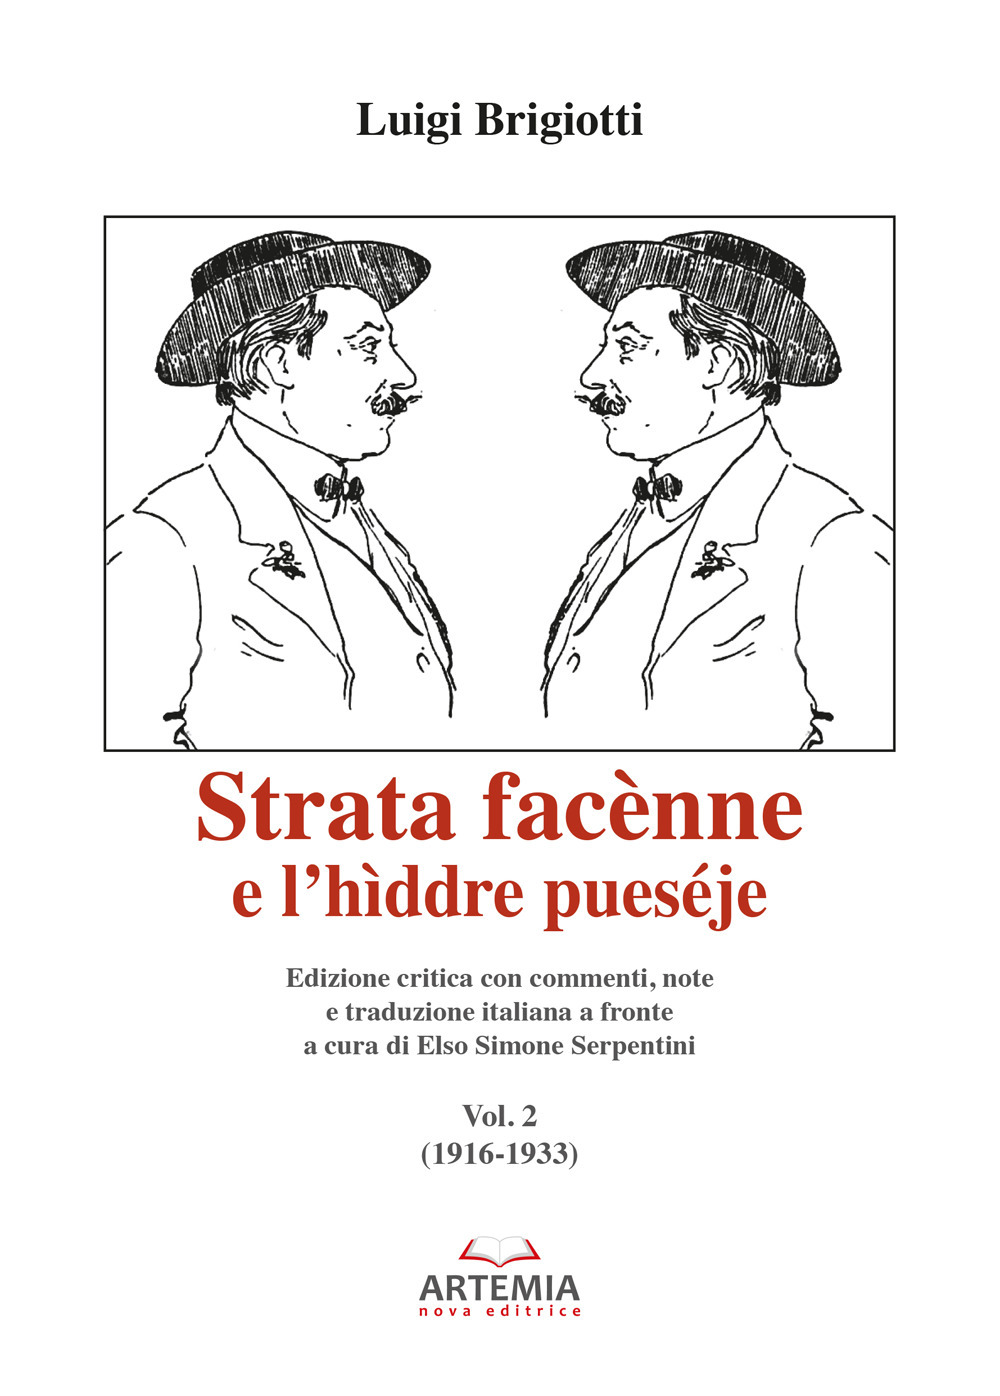 Strata facènne e l'hìddre pueséje. Testo teramese e italiano. Vol. 2: 1916-1933